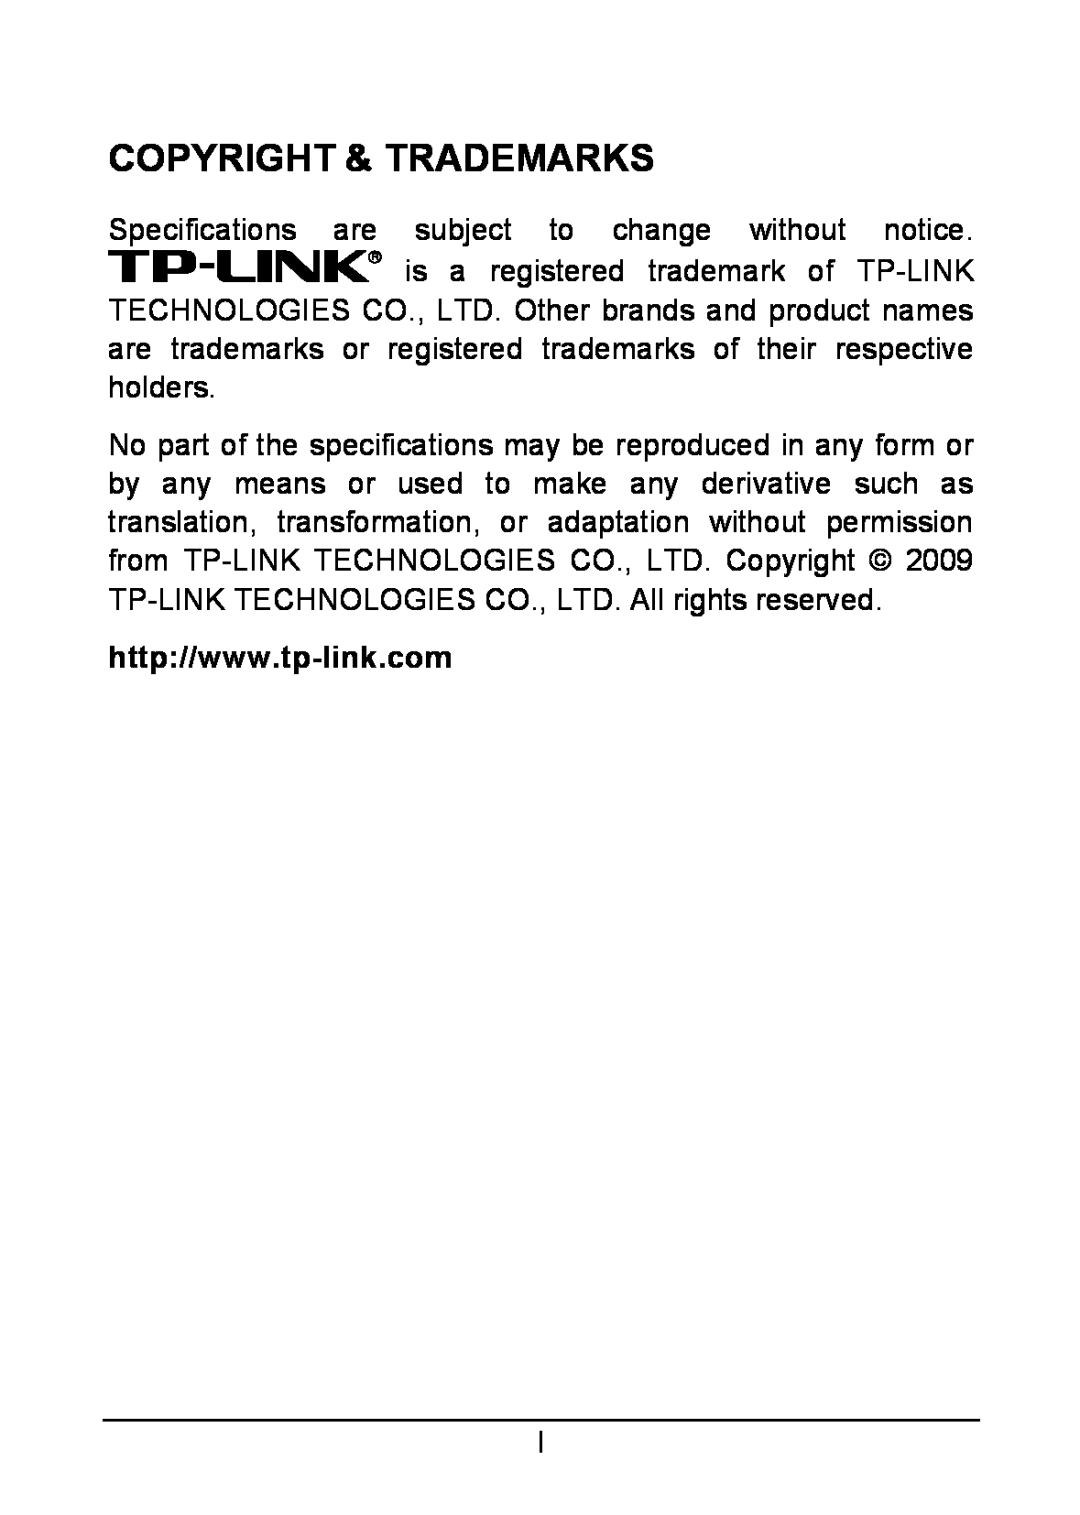 TP-Link TF-3200 manual Copyright & Trademarks 